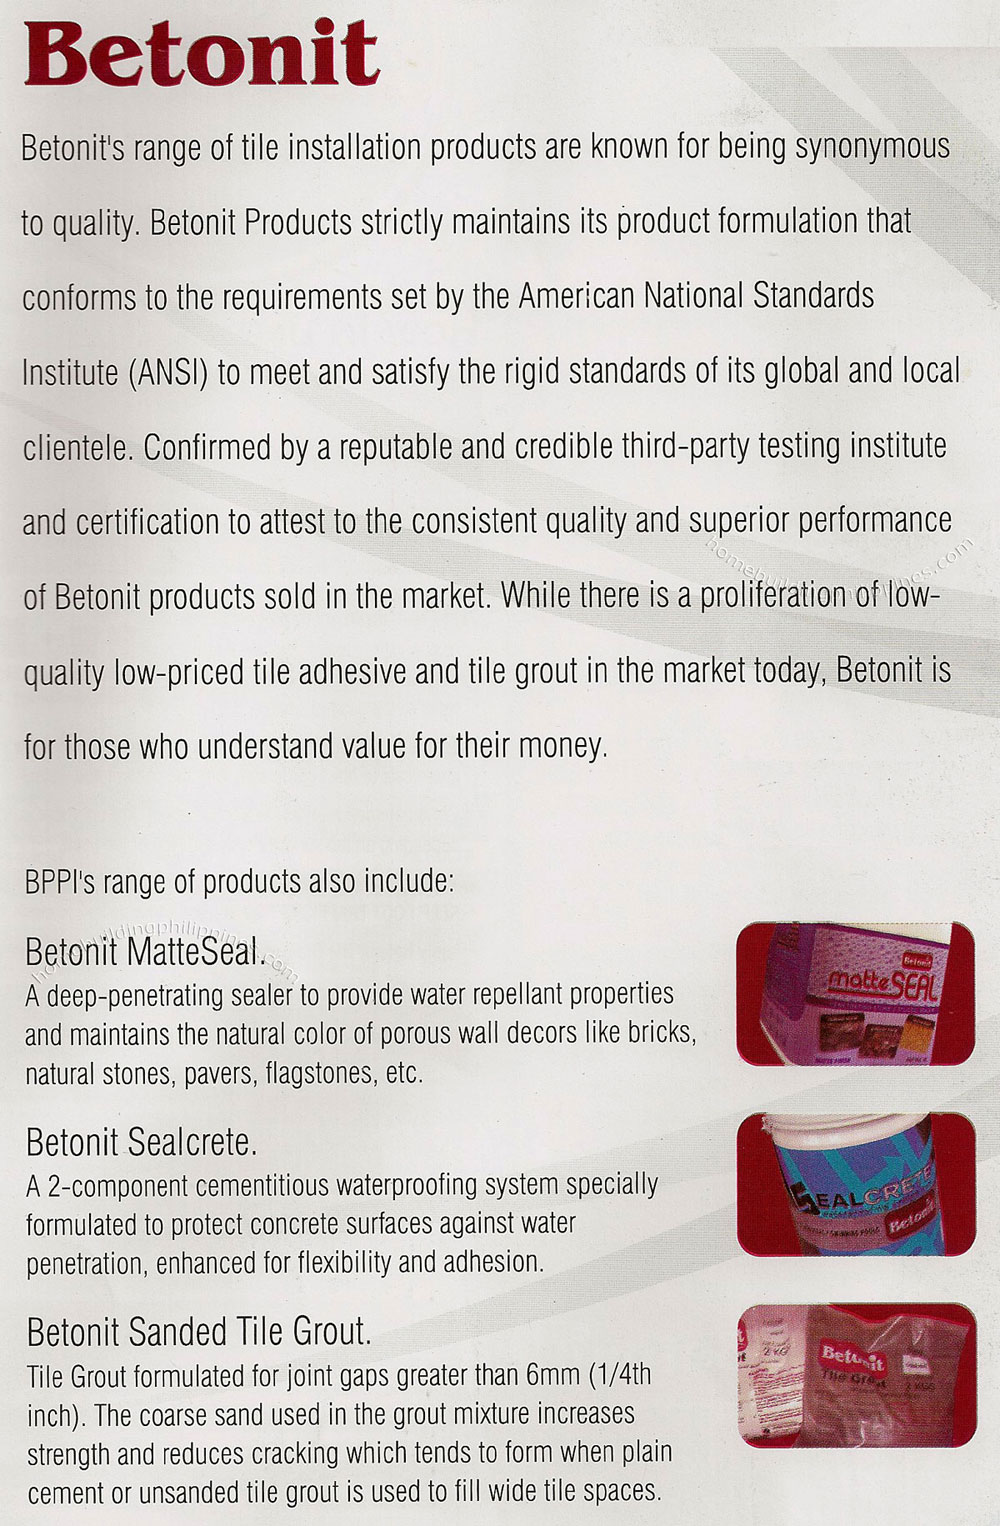 Betonit MatteSeal Water Repellant Sealer; Sealcrete Cementitious Waterproofer; Sanded Tile Grout